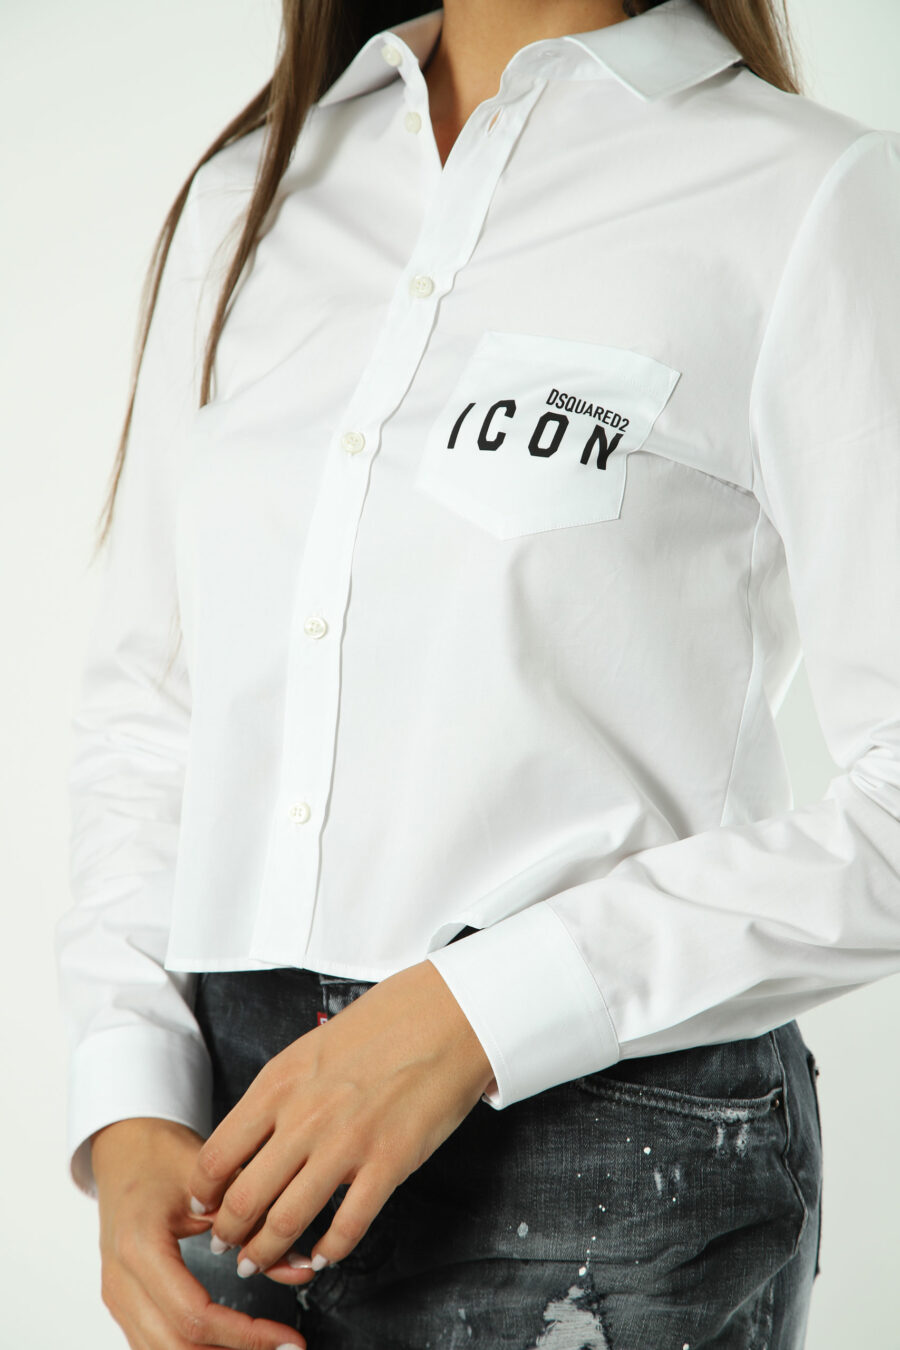 Camisa curta branca com mini-logotipo duplo ícone - Fotos 1633